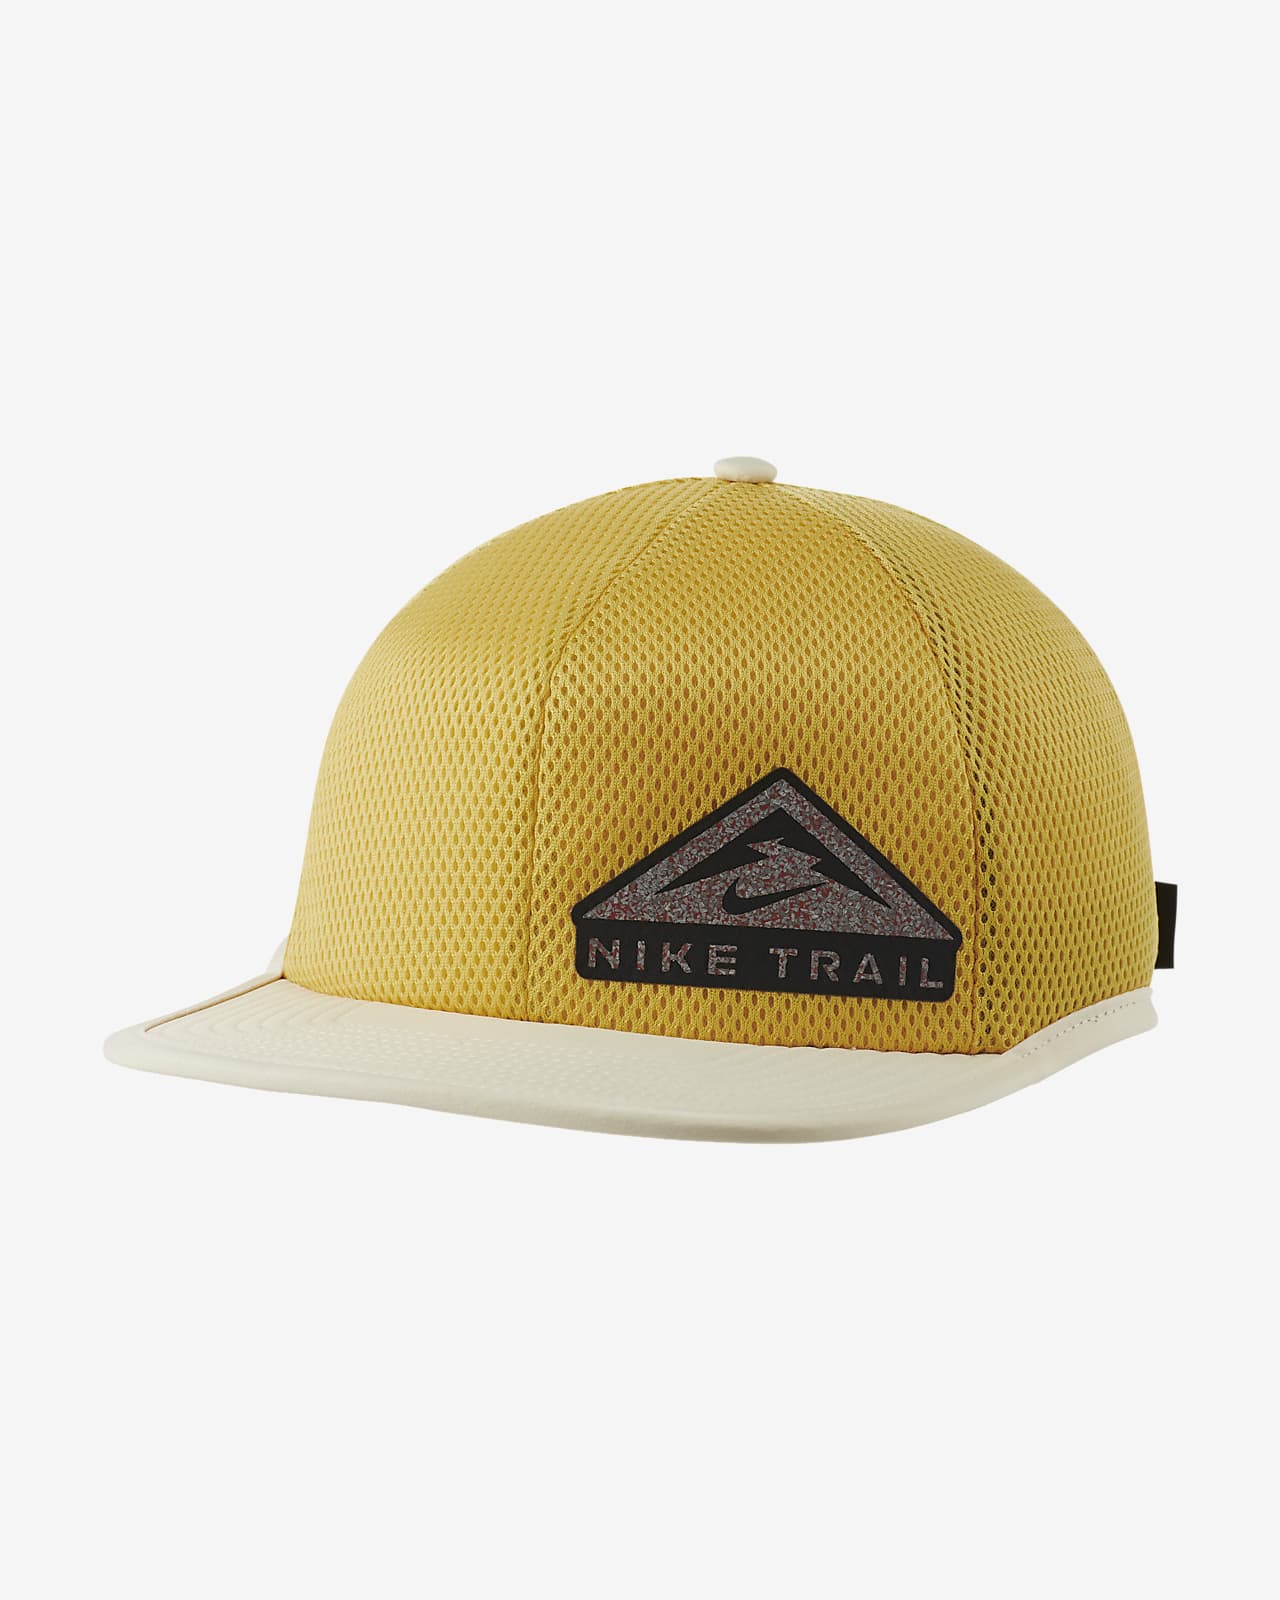 nike trail running cap